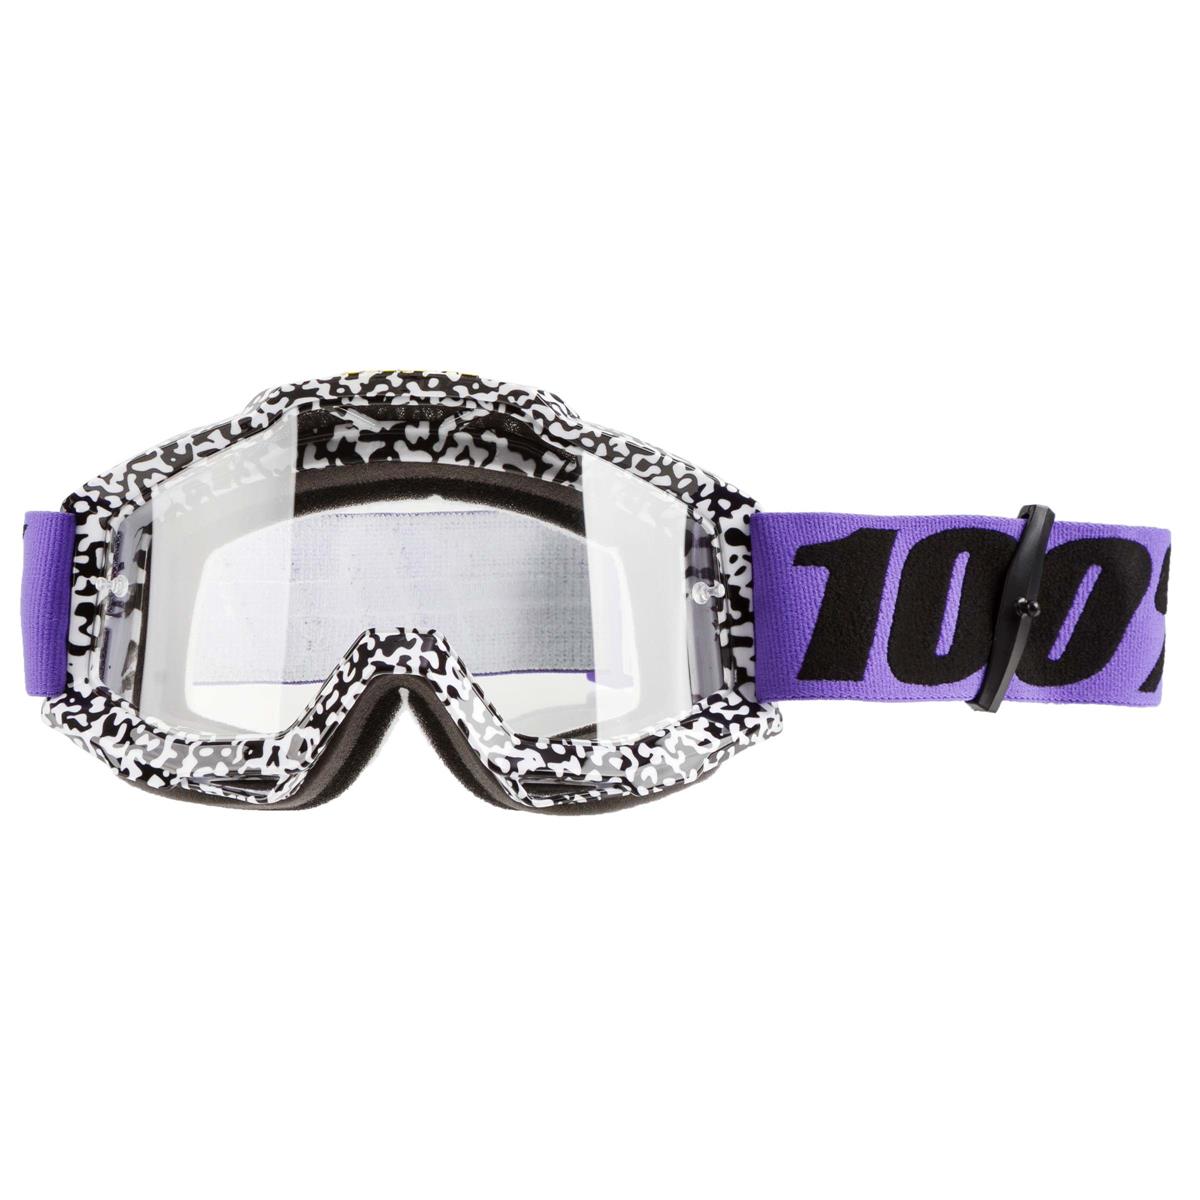 100% Goggle Accuri Brentwood - Clear Anti-Fog